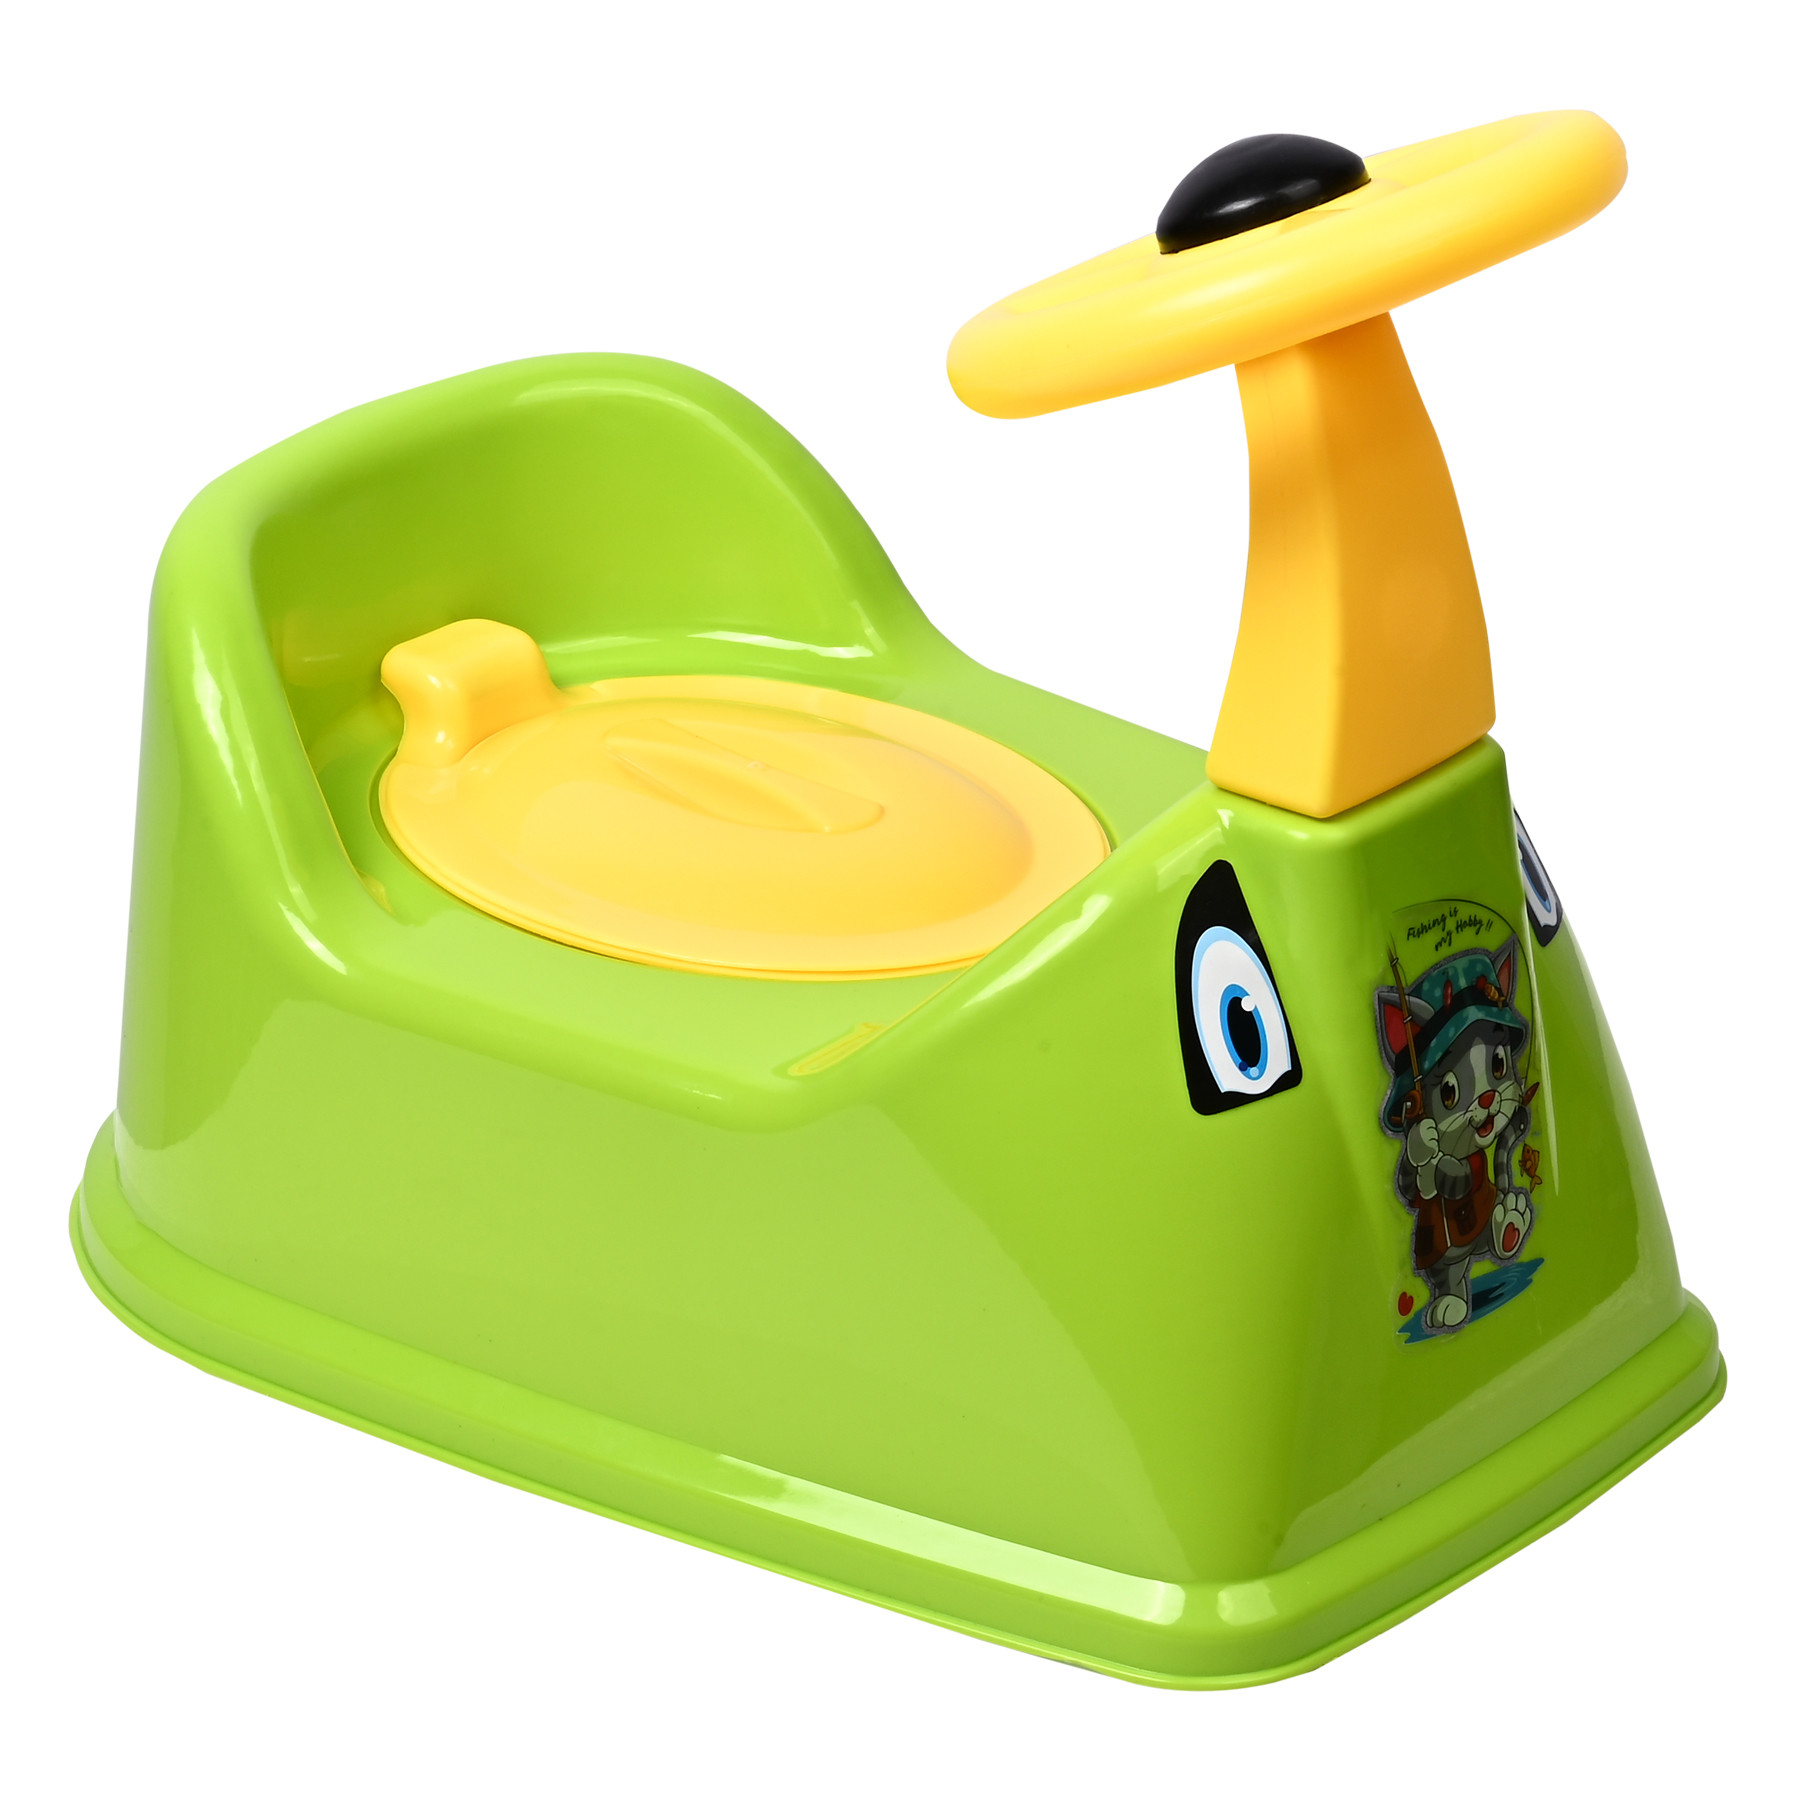 Kuber Industries Baby Potty Seat | Toilet Potty Training Seat | Baby Potty Trainer Seat | Potty Seat For Child | Potty Training Seat for Kids | Steering Design | Green & Yellow